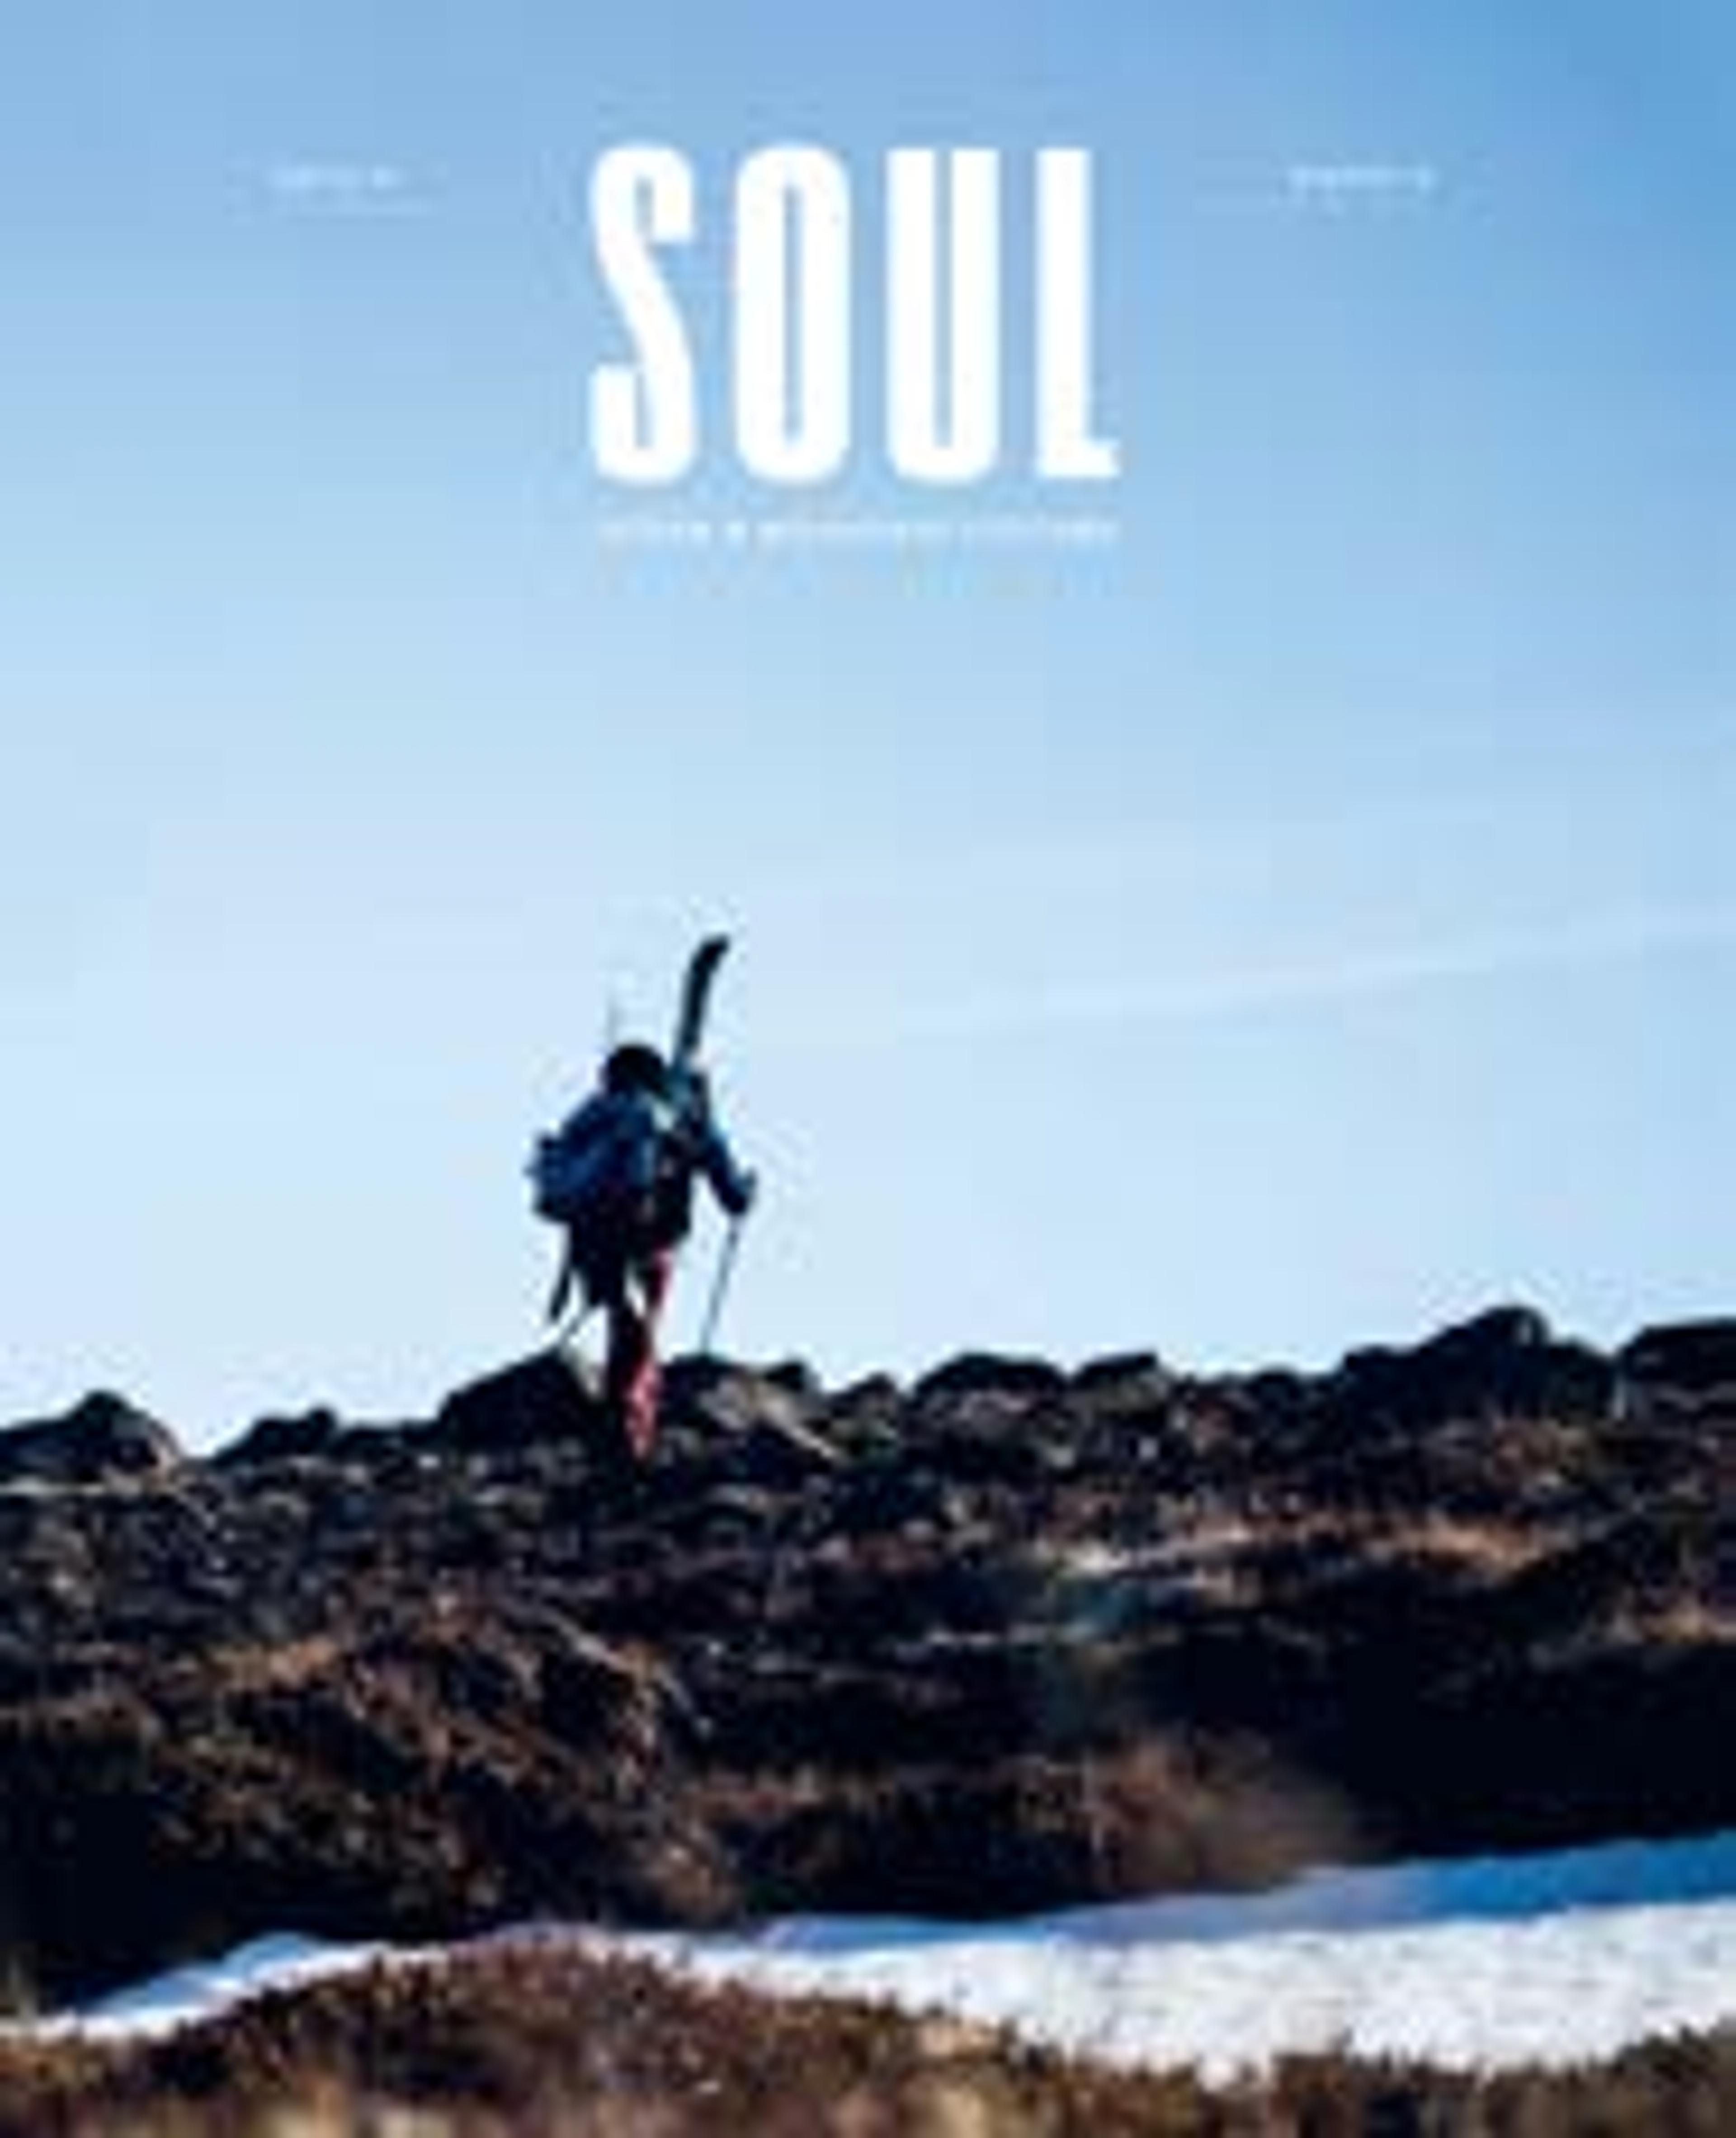 SOUL Magazine verder als samengevoegde titel